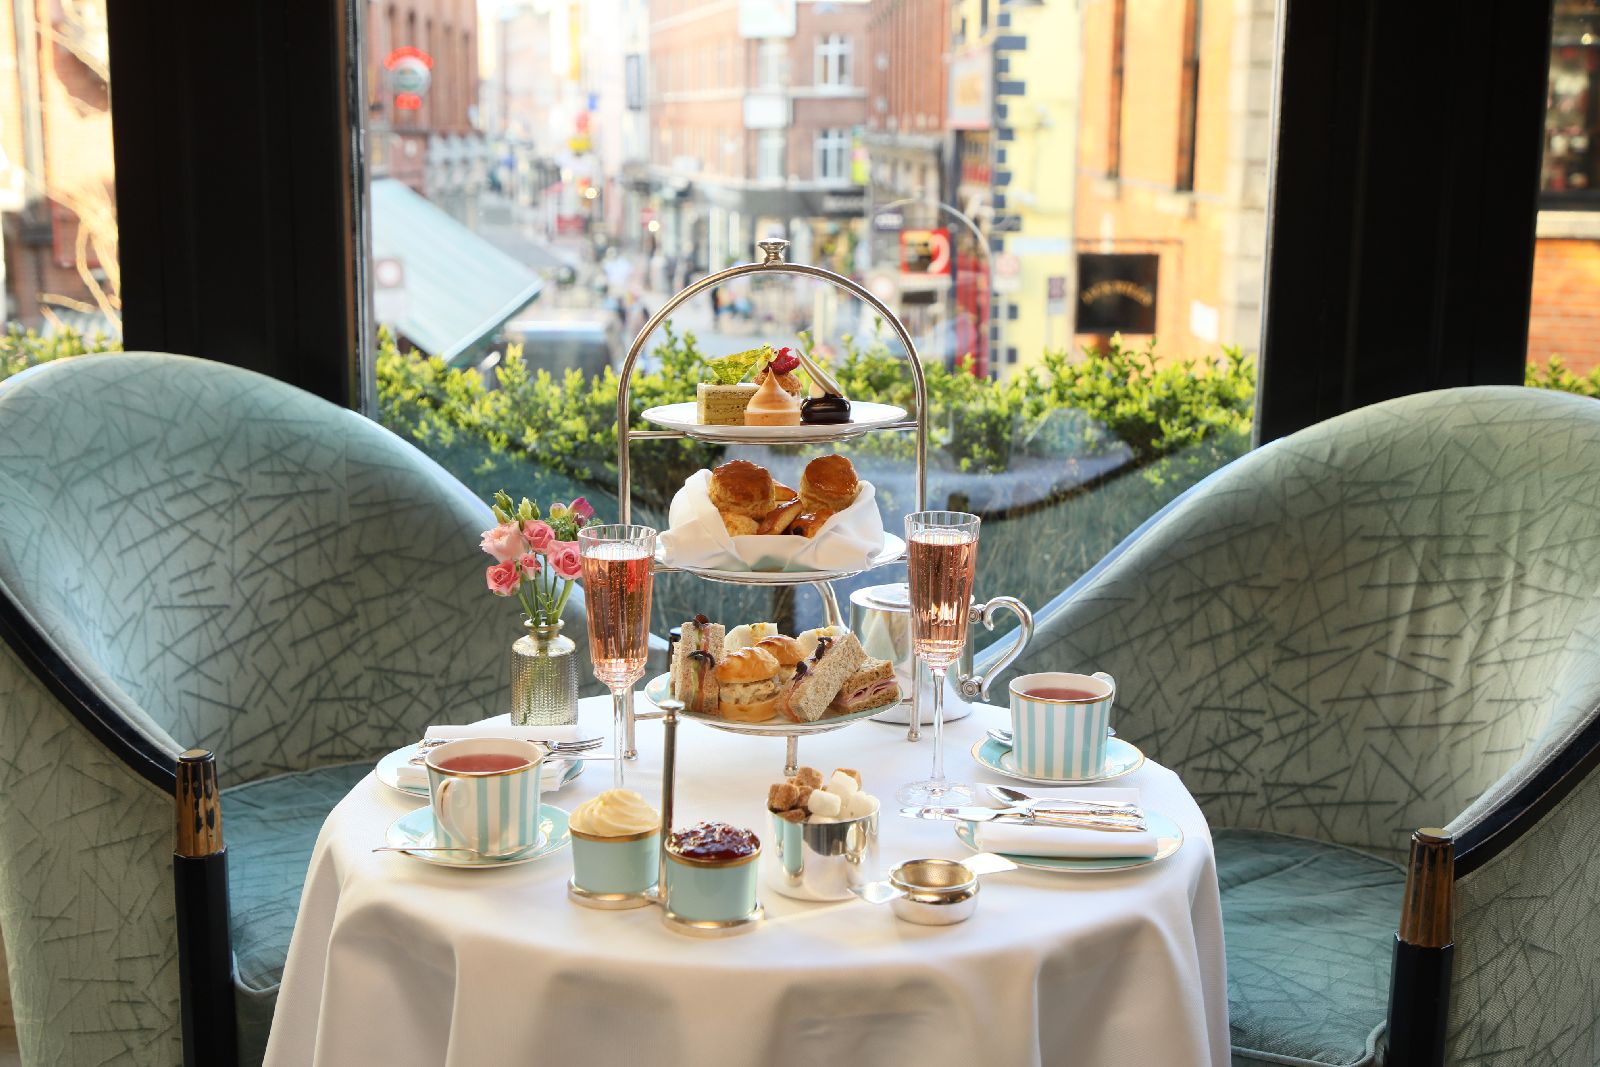 Afternoon tea overlooking Grafton Street at The Westbury Hotel in Dublin Ireland